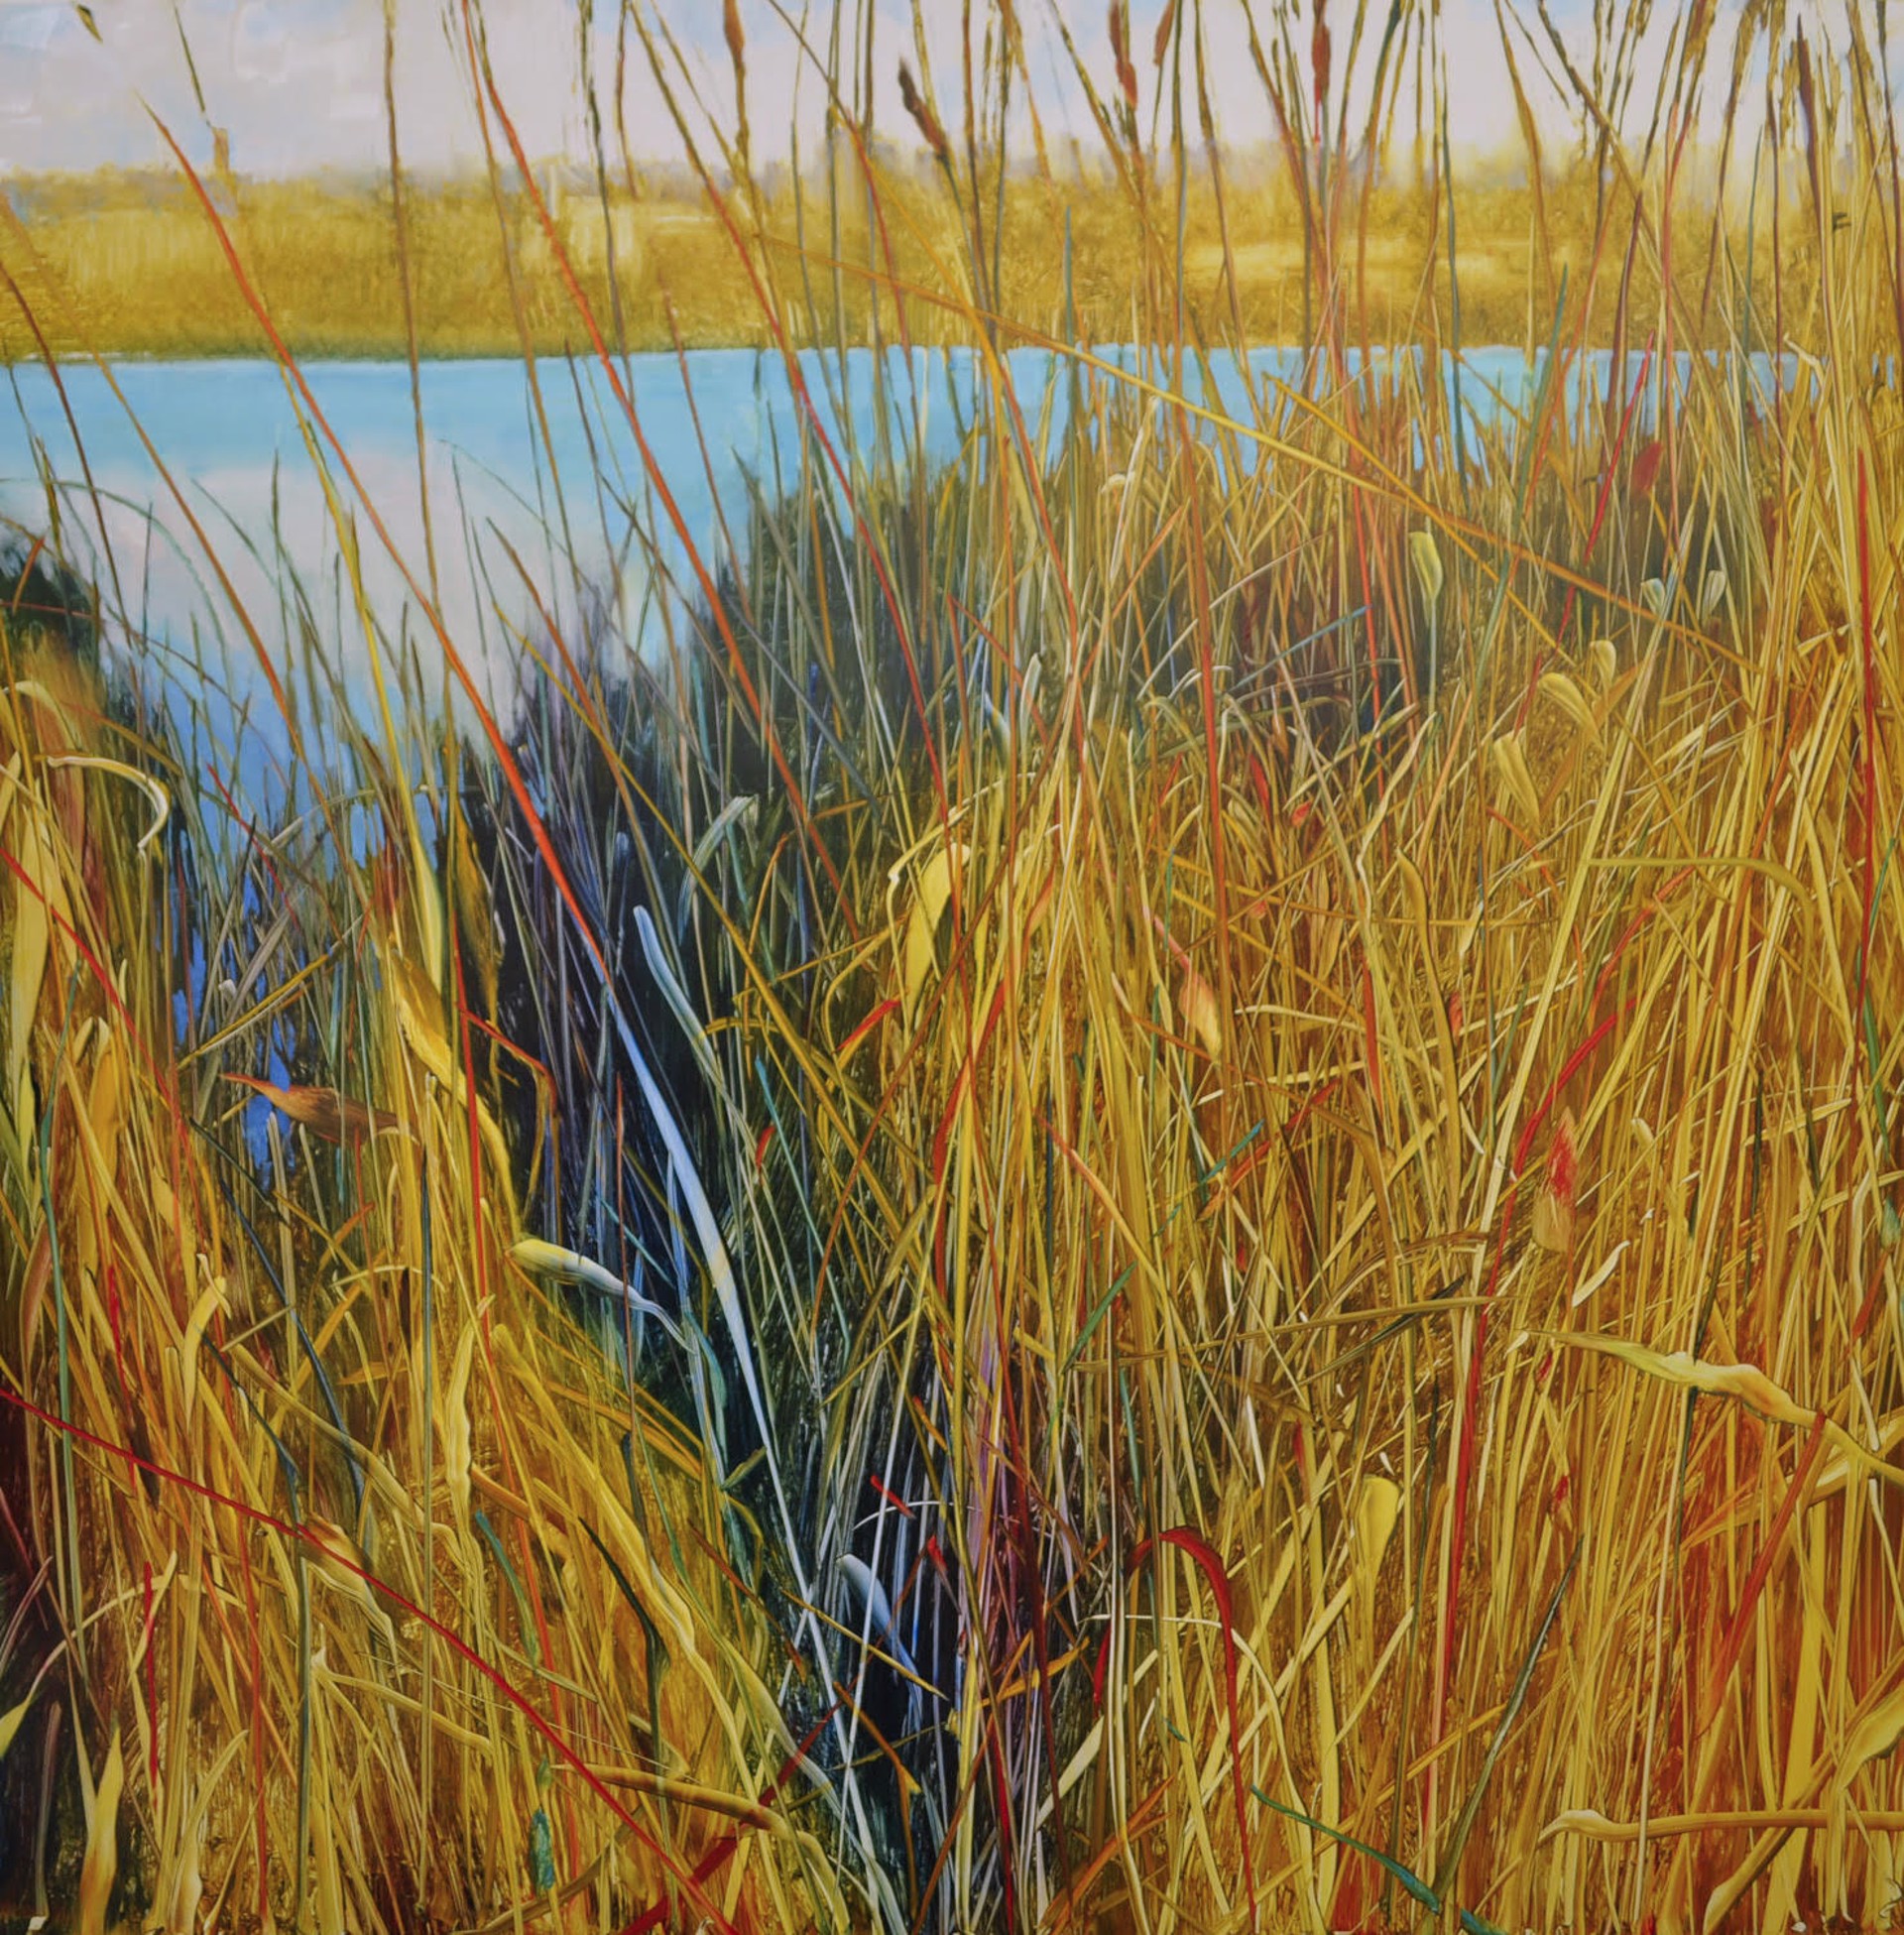 Between the Reeds by David Dunlop